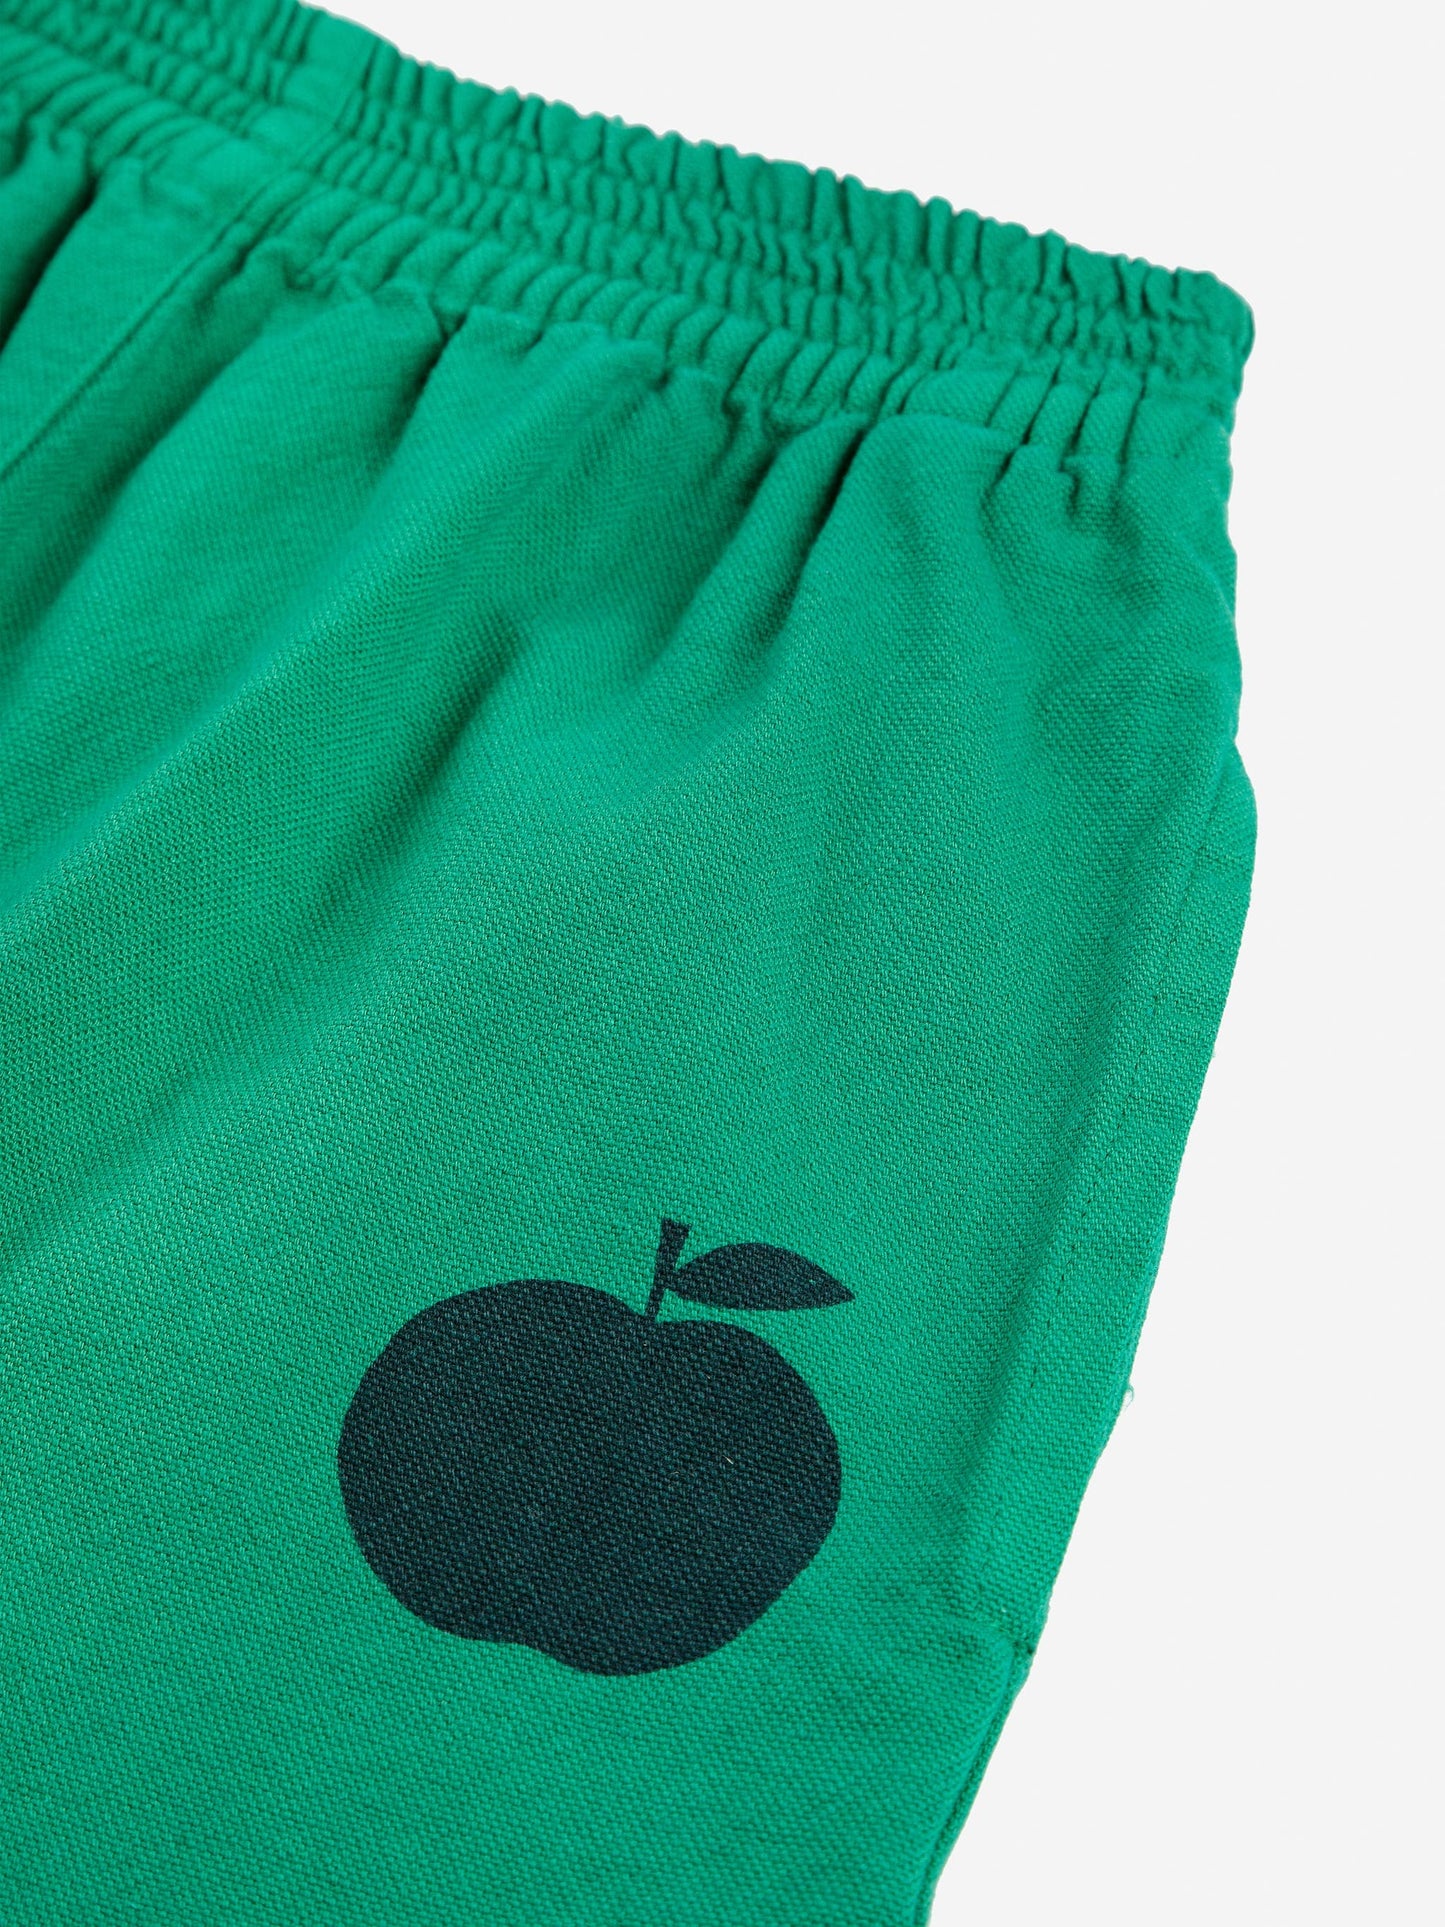 Poma green woven pants